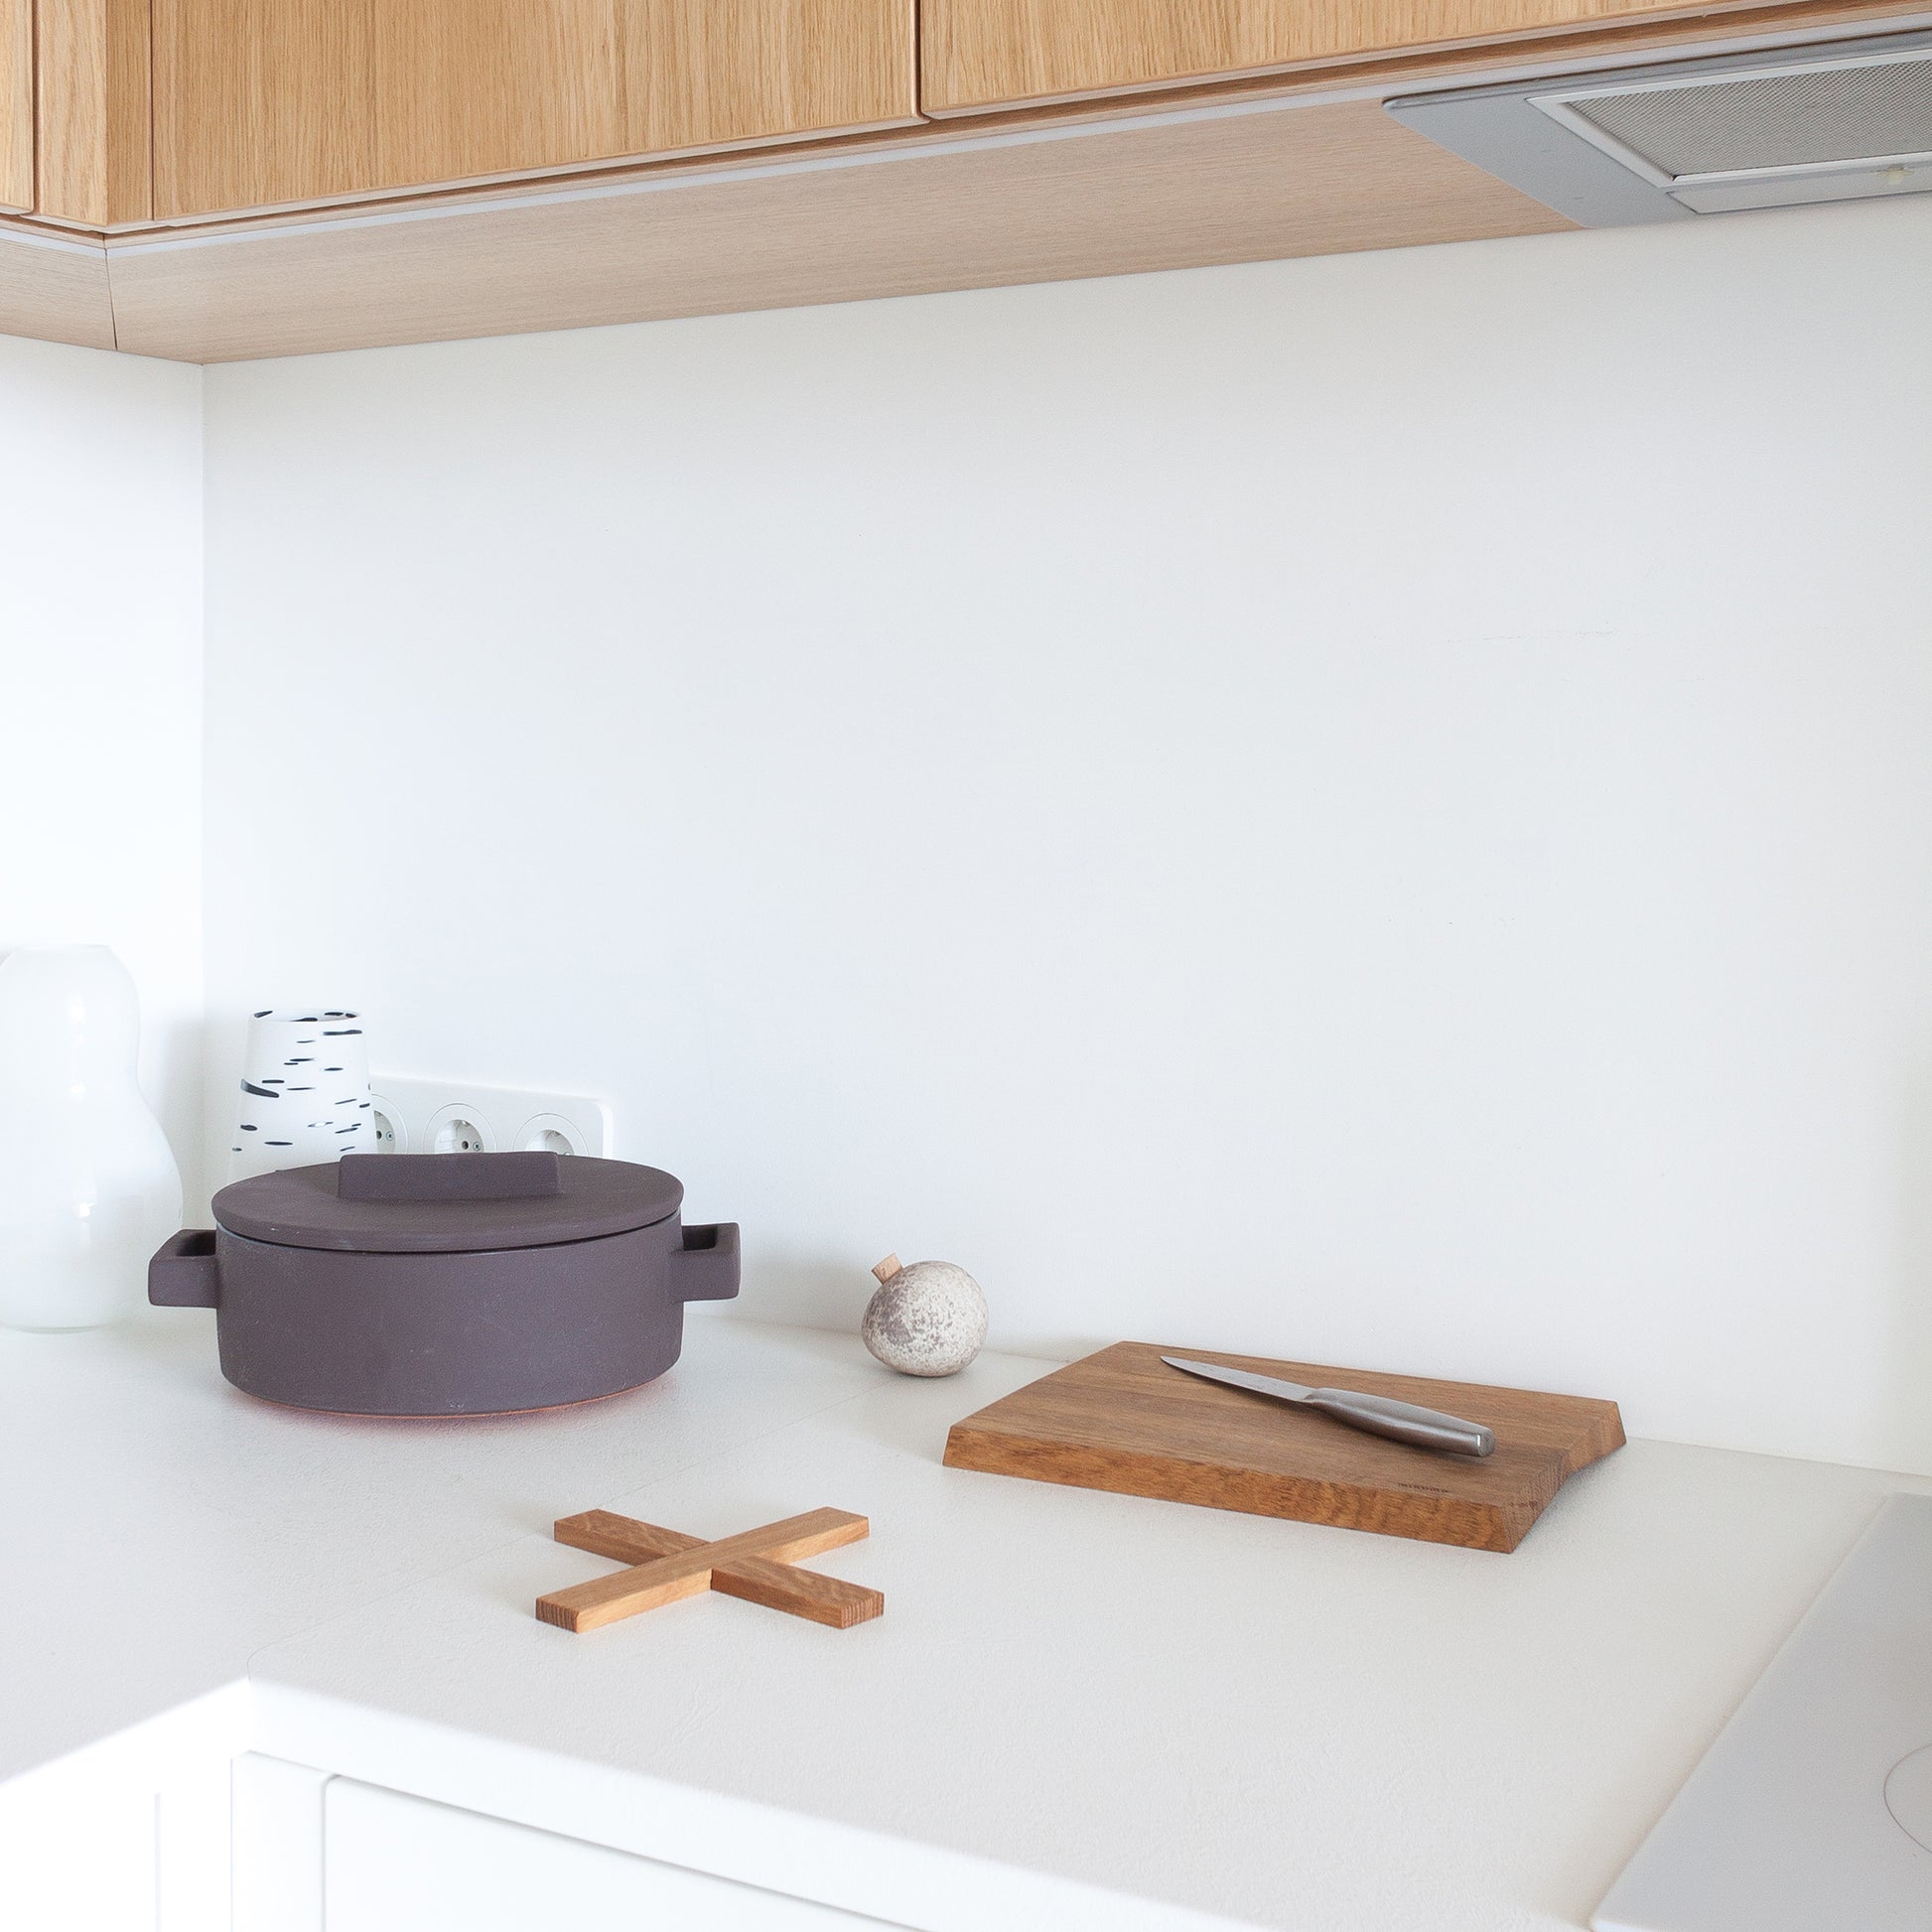 Minumo minimal design products in scandinavian white kitchen